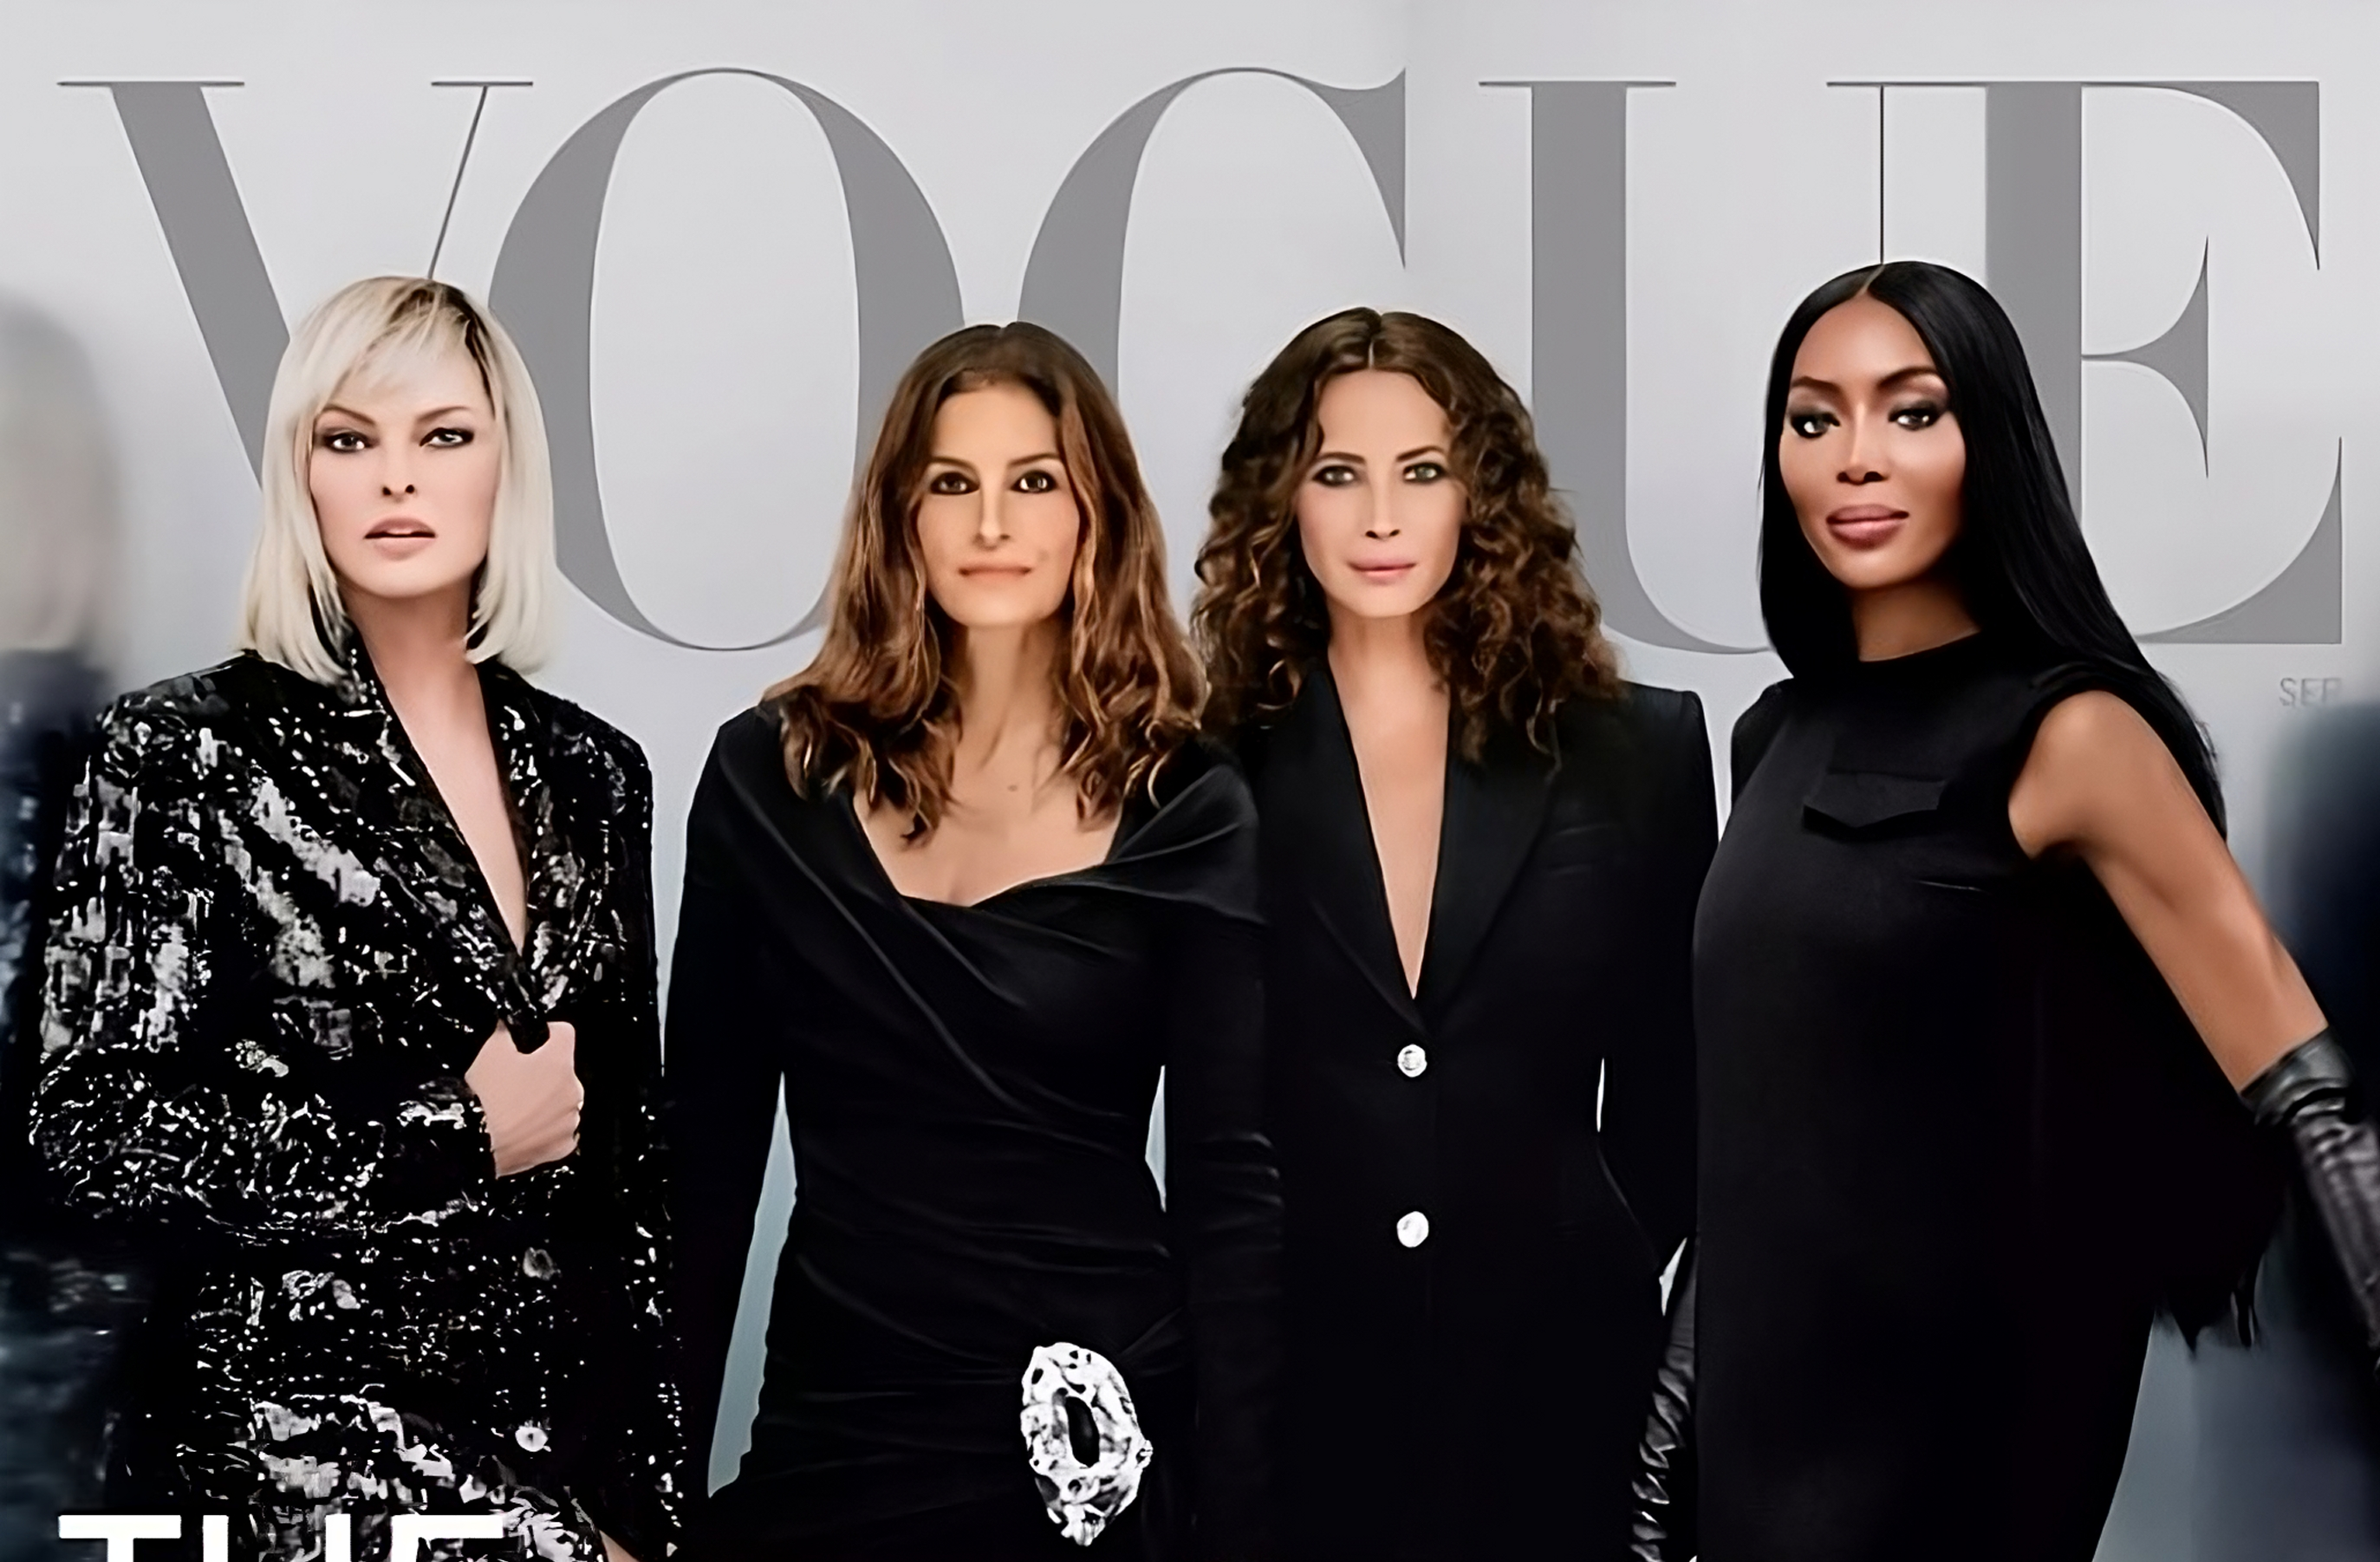 Rujansku naslovnicu Voguea krase četiri manekenke iz 90-ih: Naomi Campbell, Cindy Crawford, Linda Evangelista i Christy Turlington